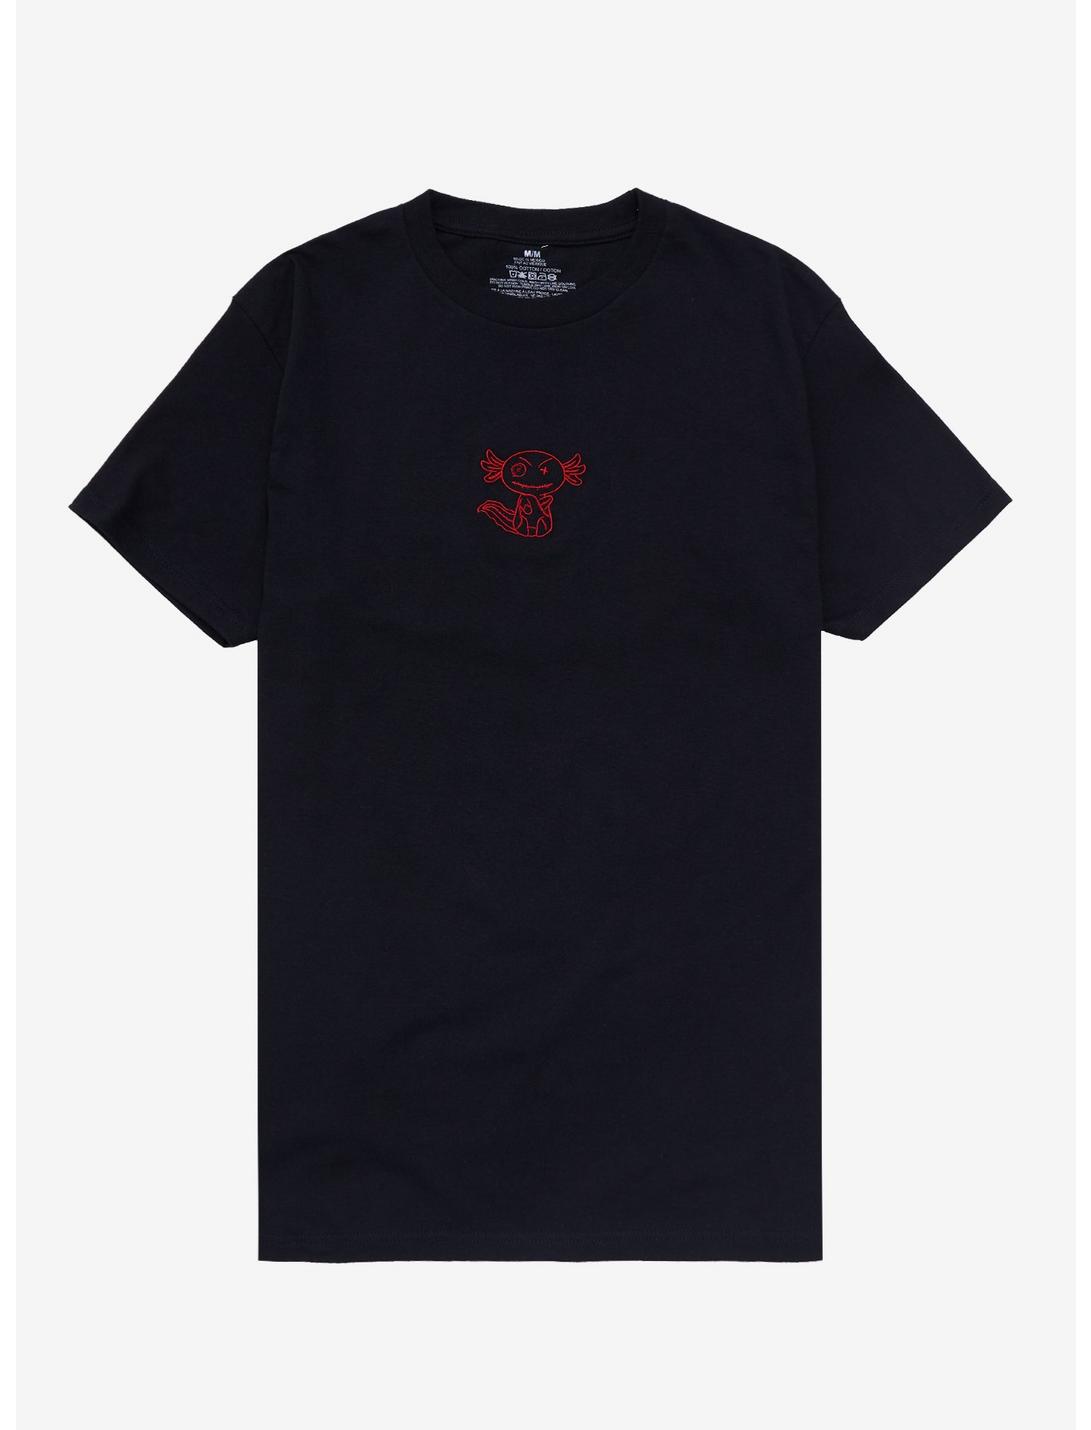 Dark Axolotl Ragdoll Embroidery T-Shirt, BLACK, hi-res